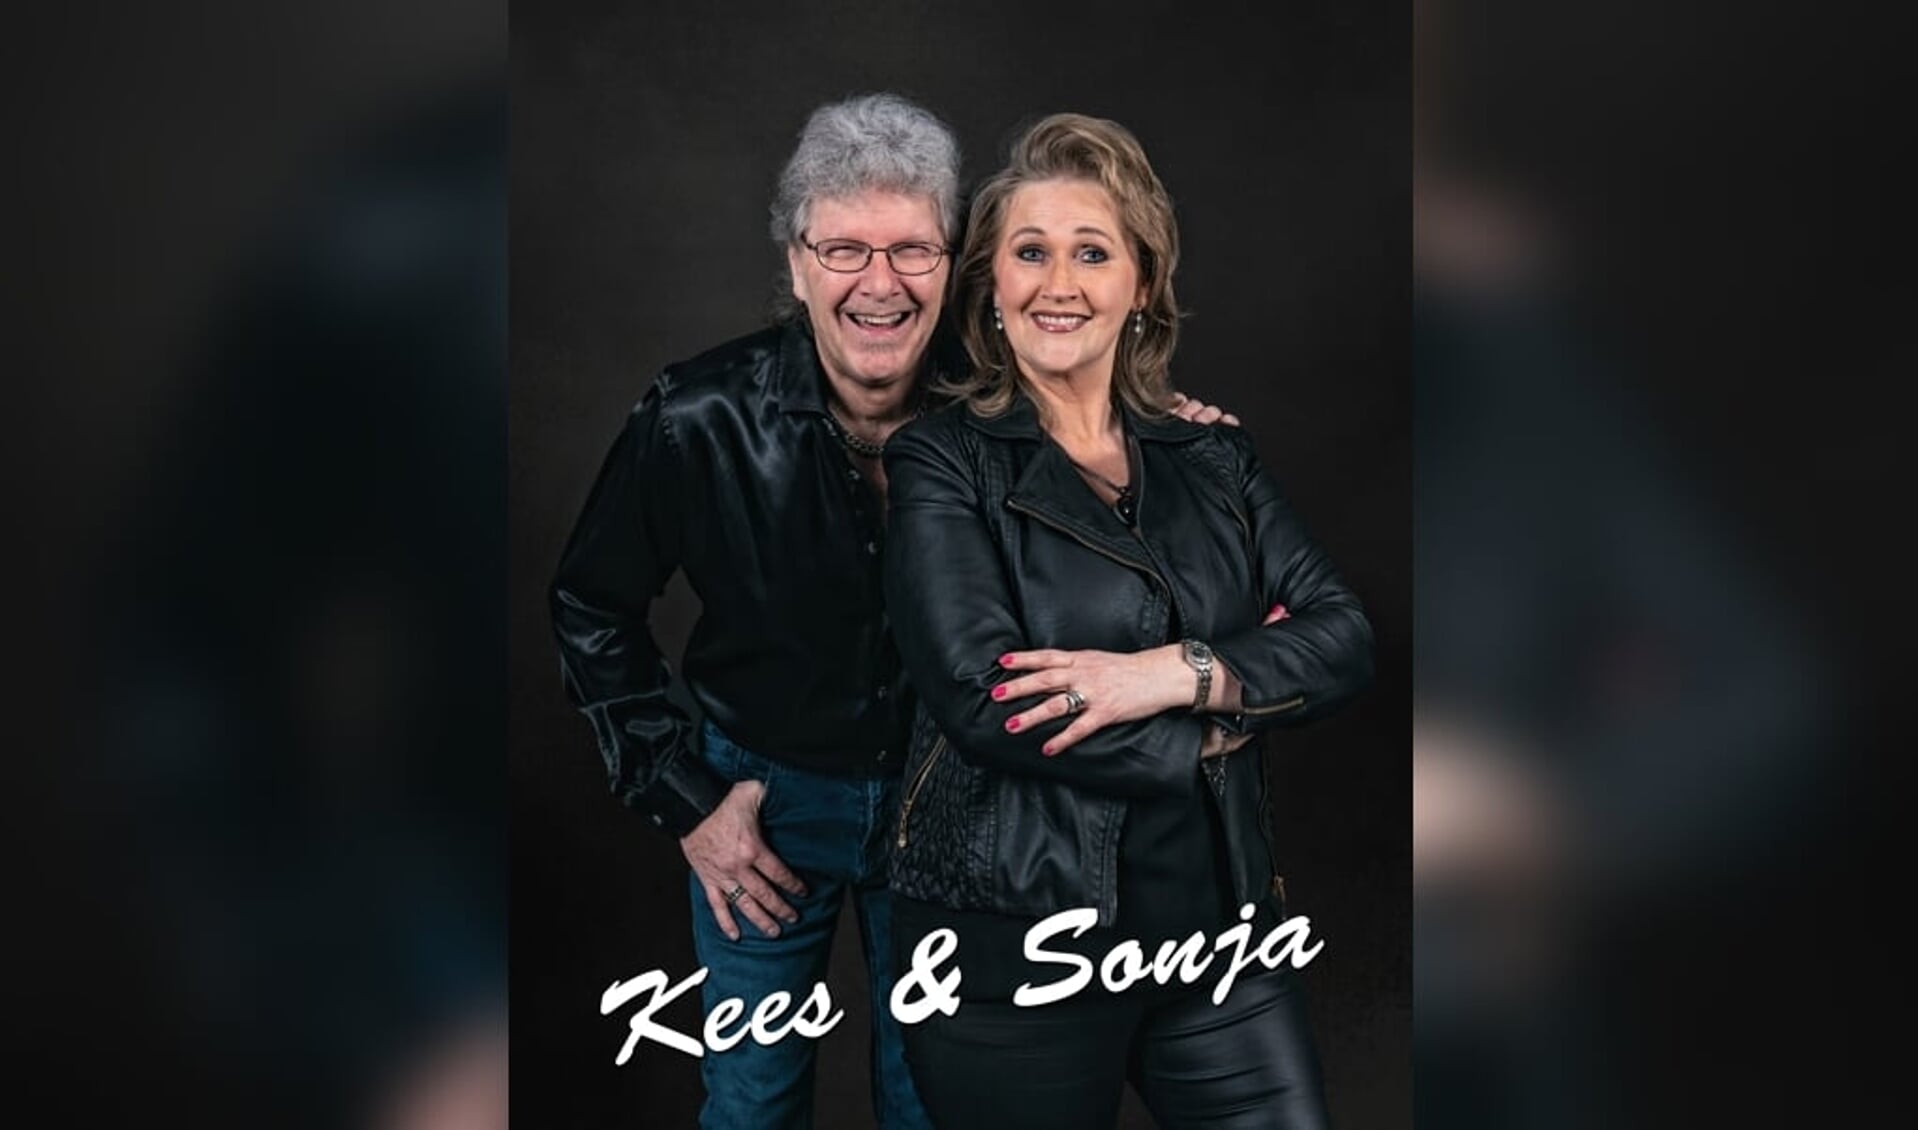 Kees & Sonja, sinds 2020 een muzikaal duo.